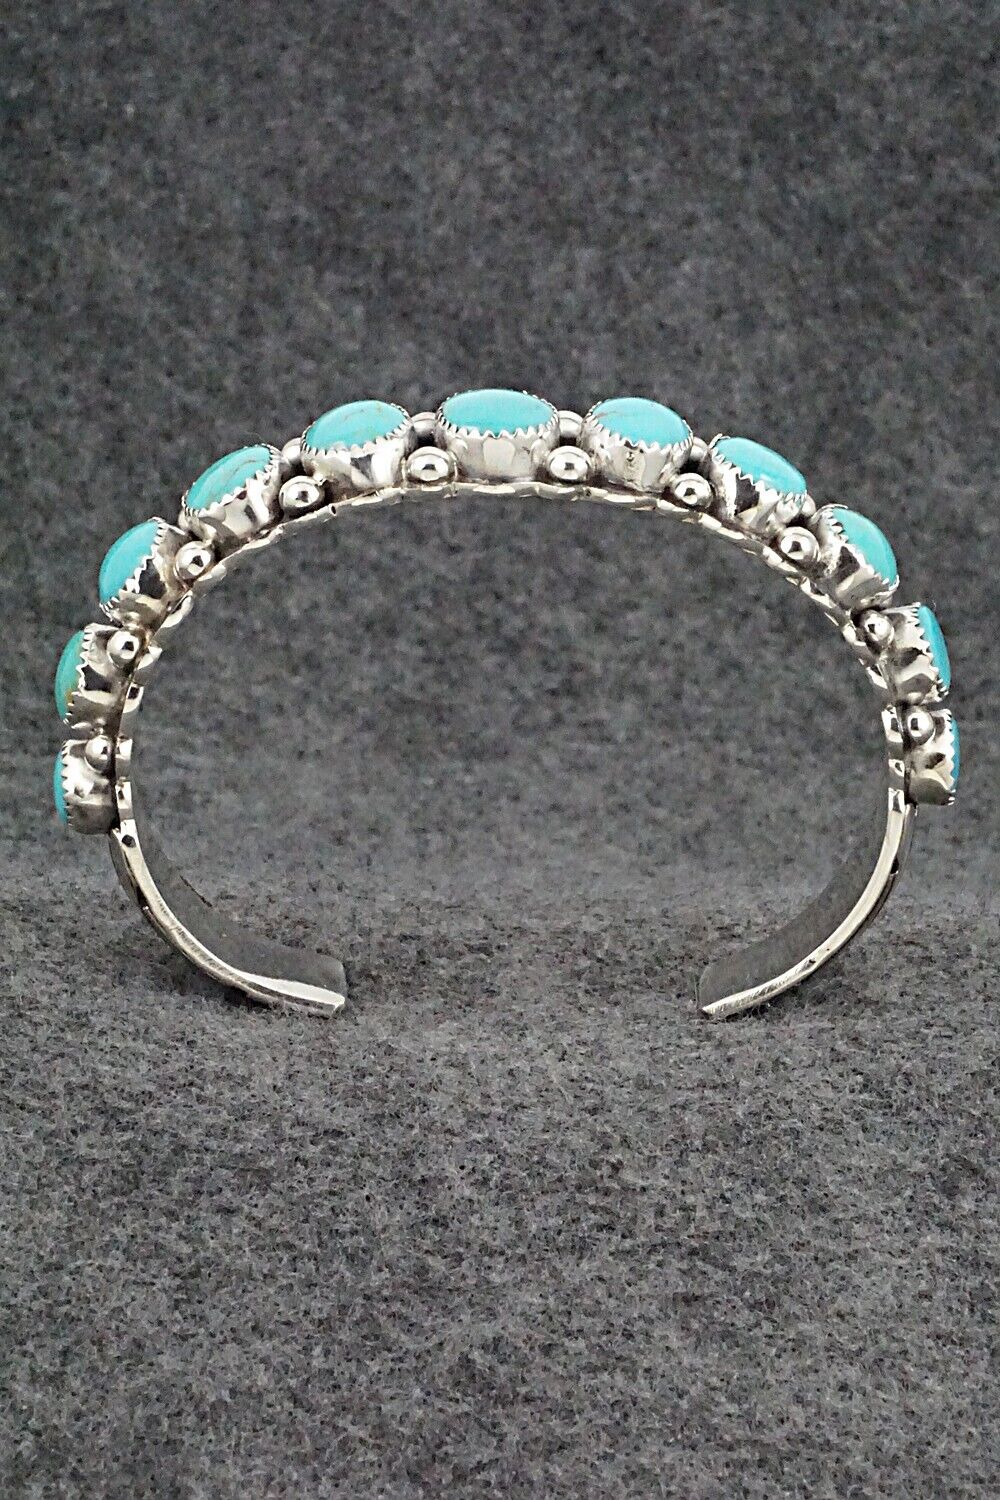 Turquoise & Sterling Silver Bracelet - Wilbert Muskett Sr.